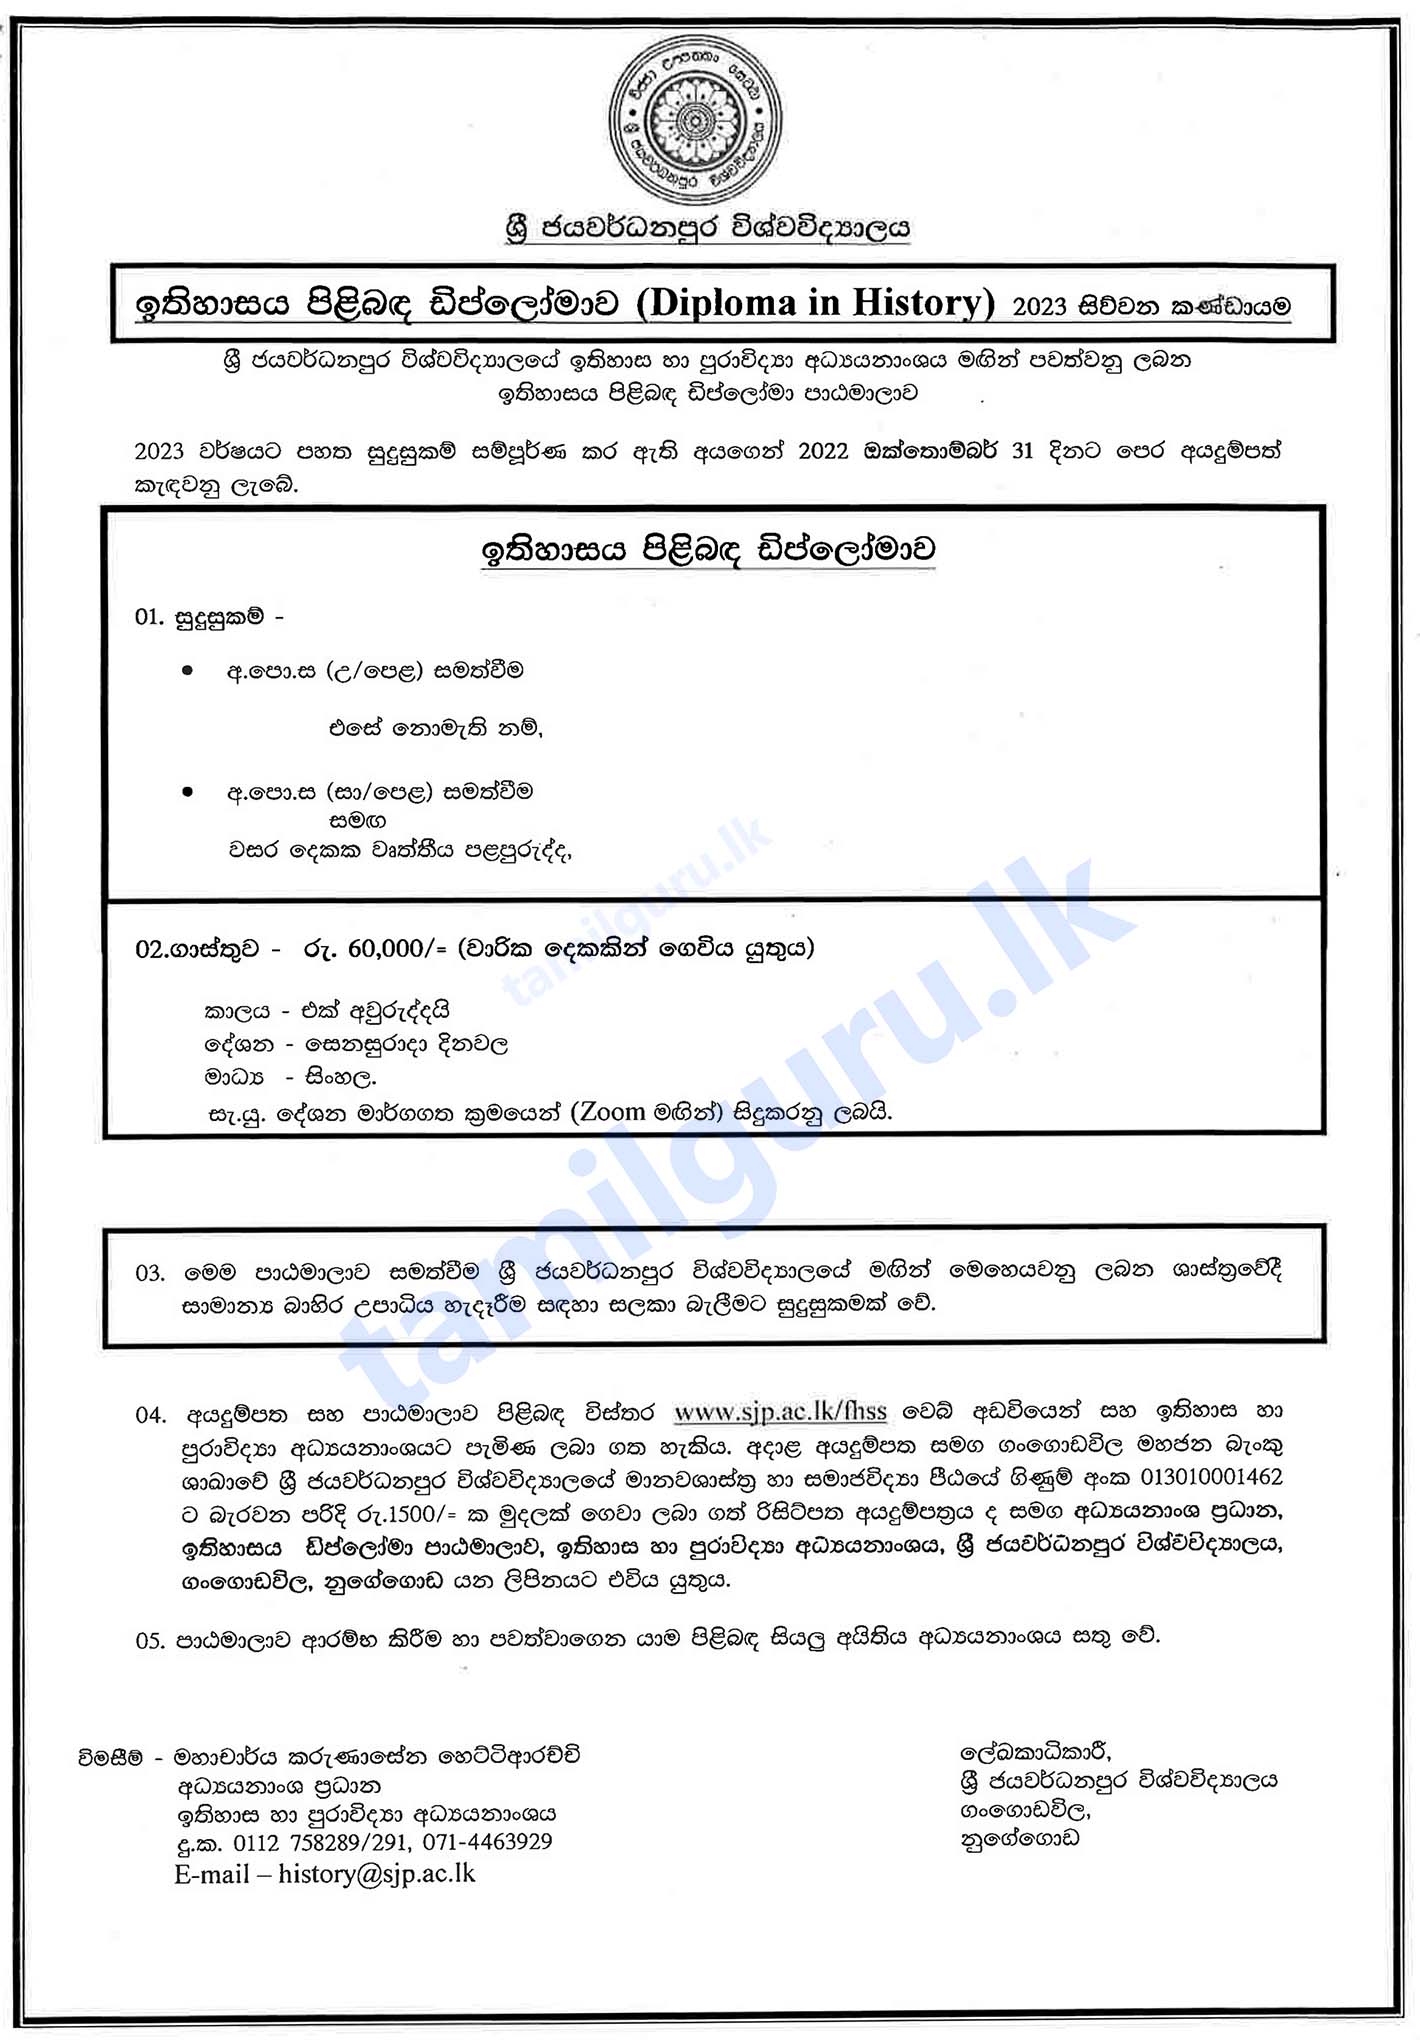 Diploma in History Application (2022/2023) - University of Sri Jayewardenepura